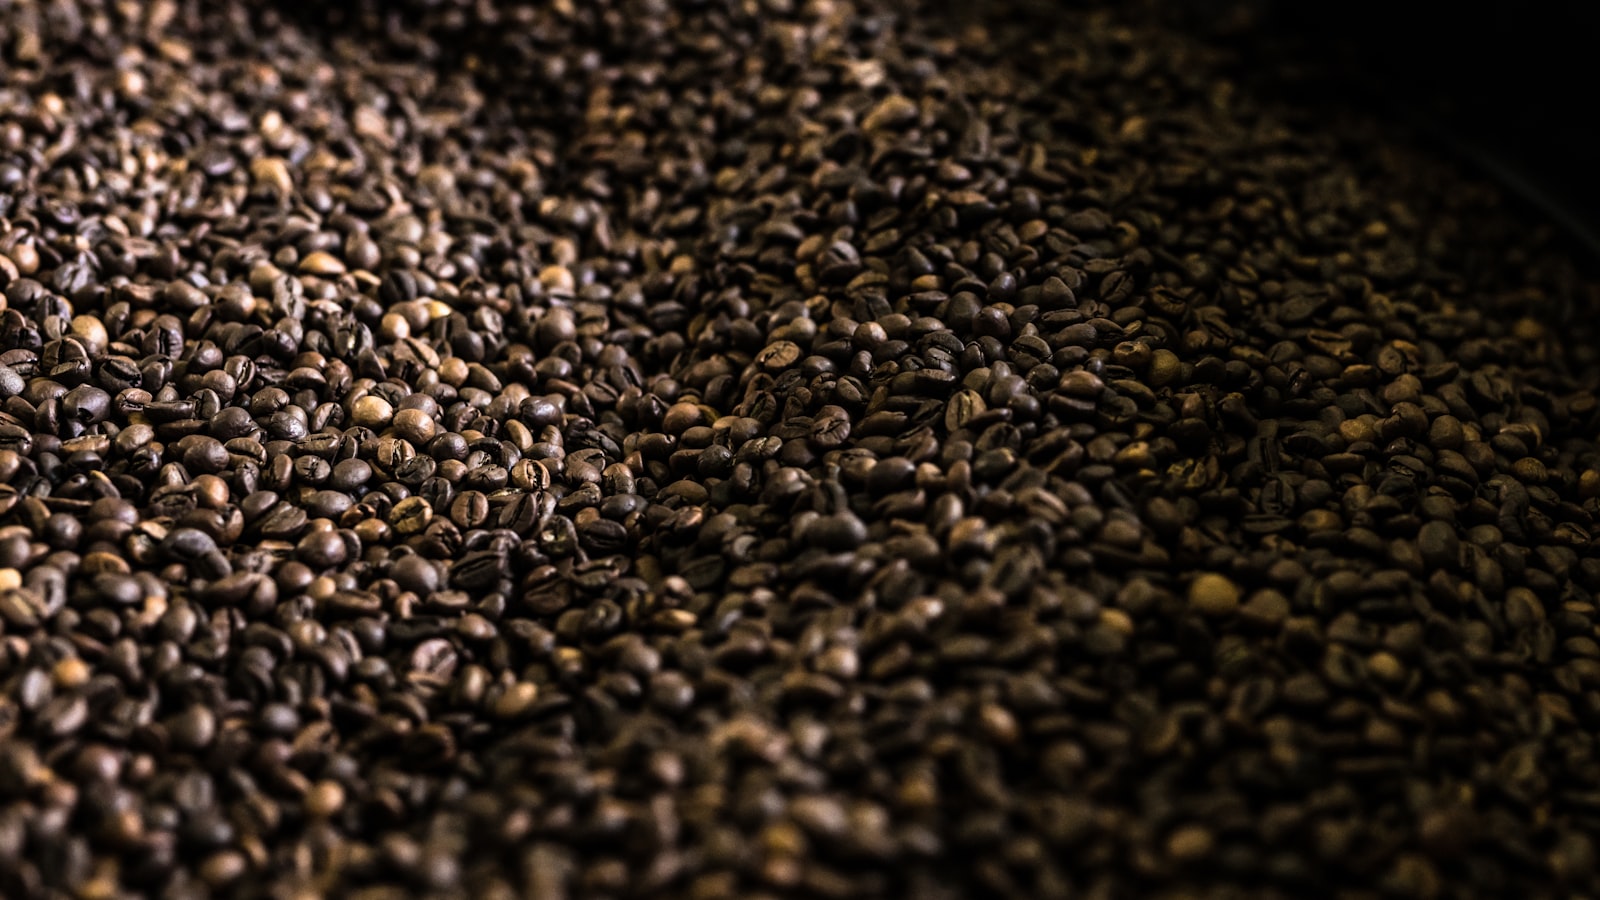 #180 50/1.4 sample photo. Coffee grain lot photography